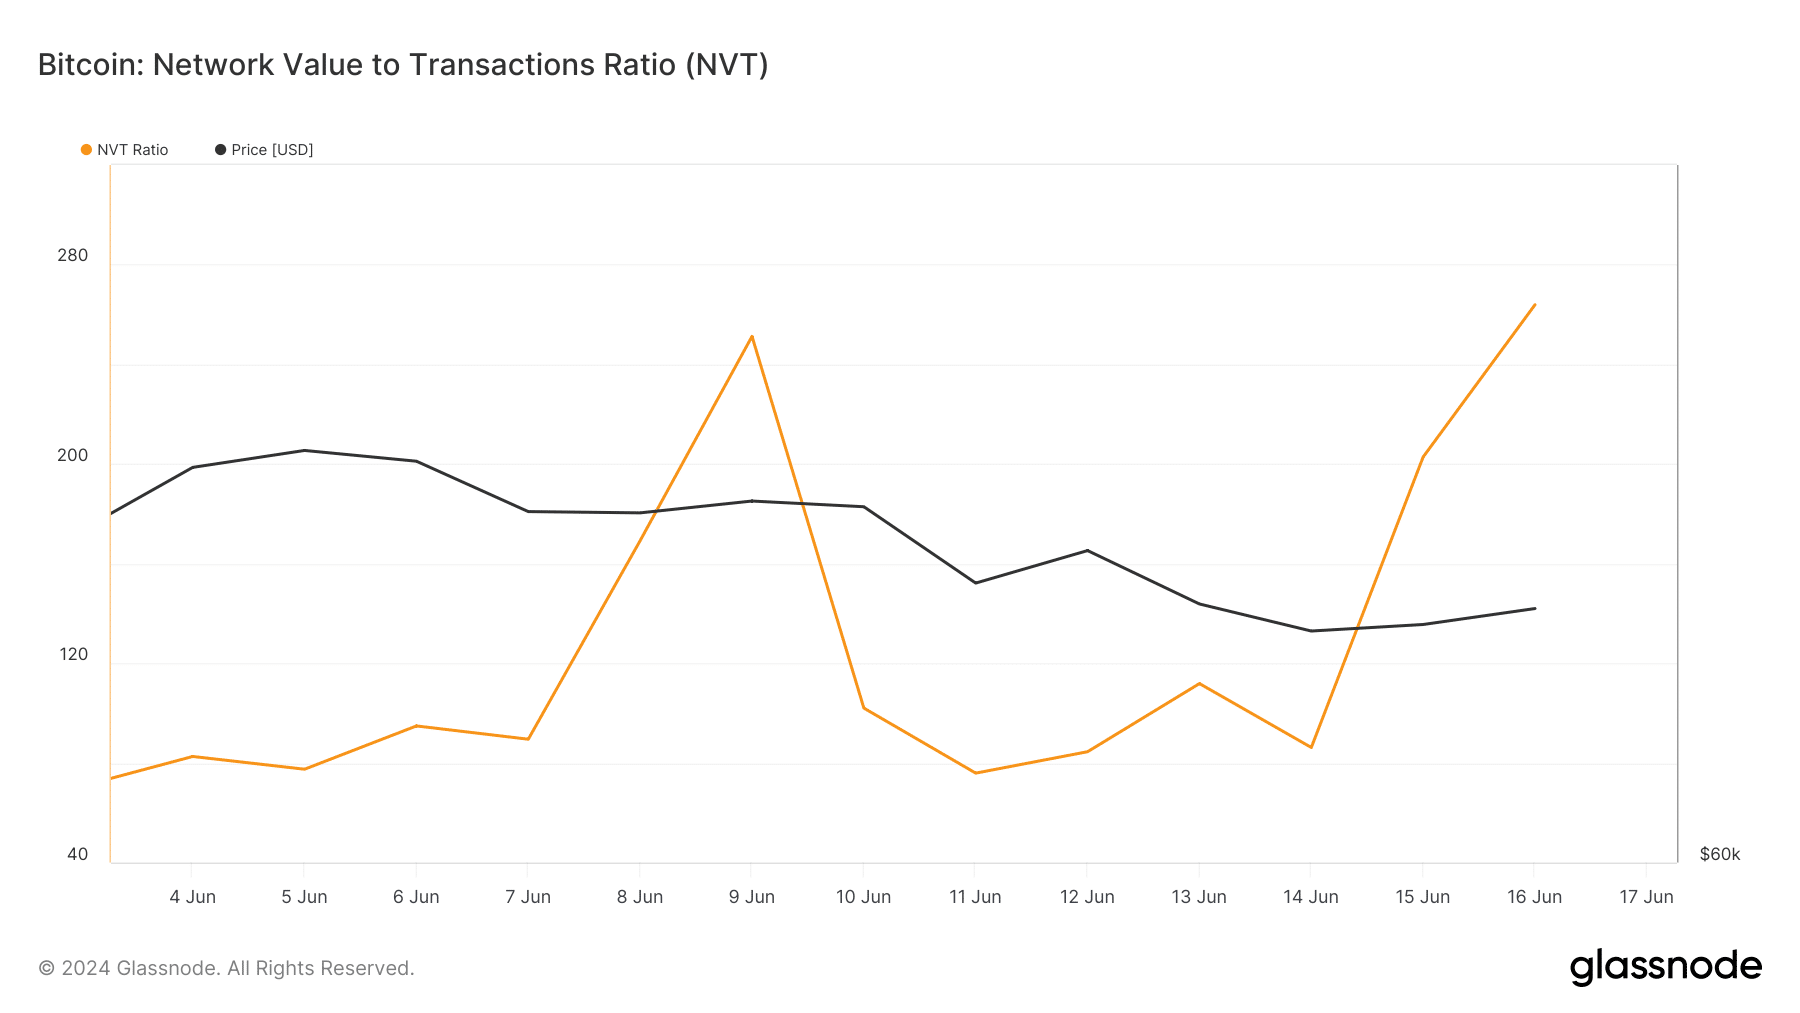 Bitcoin's NVT ratio spiked